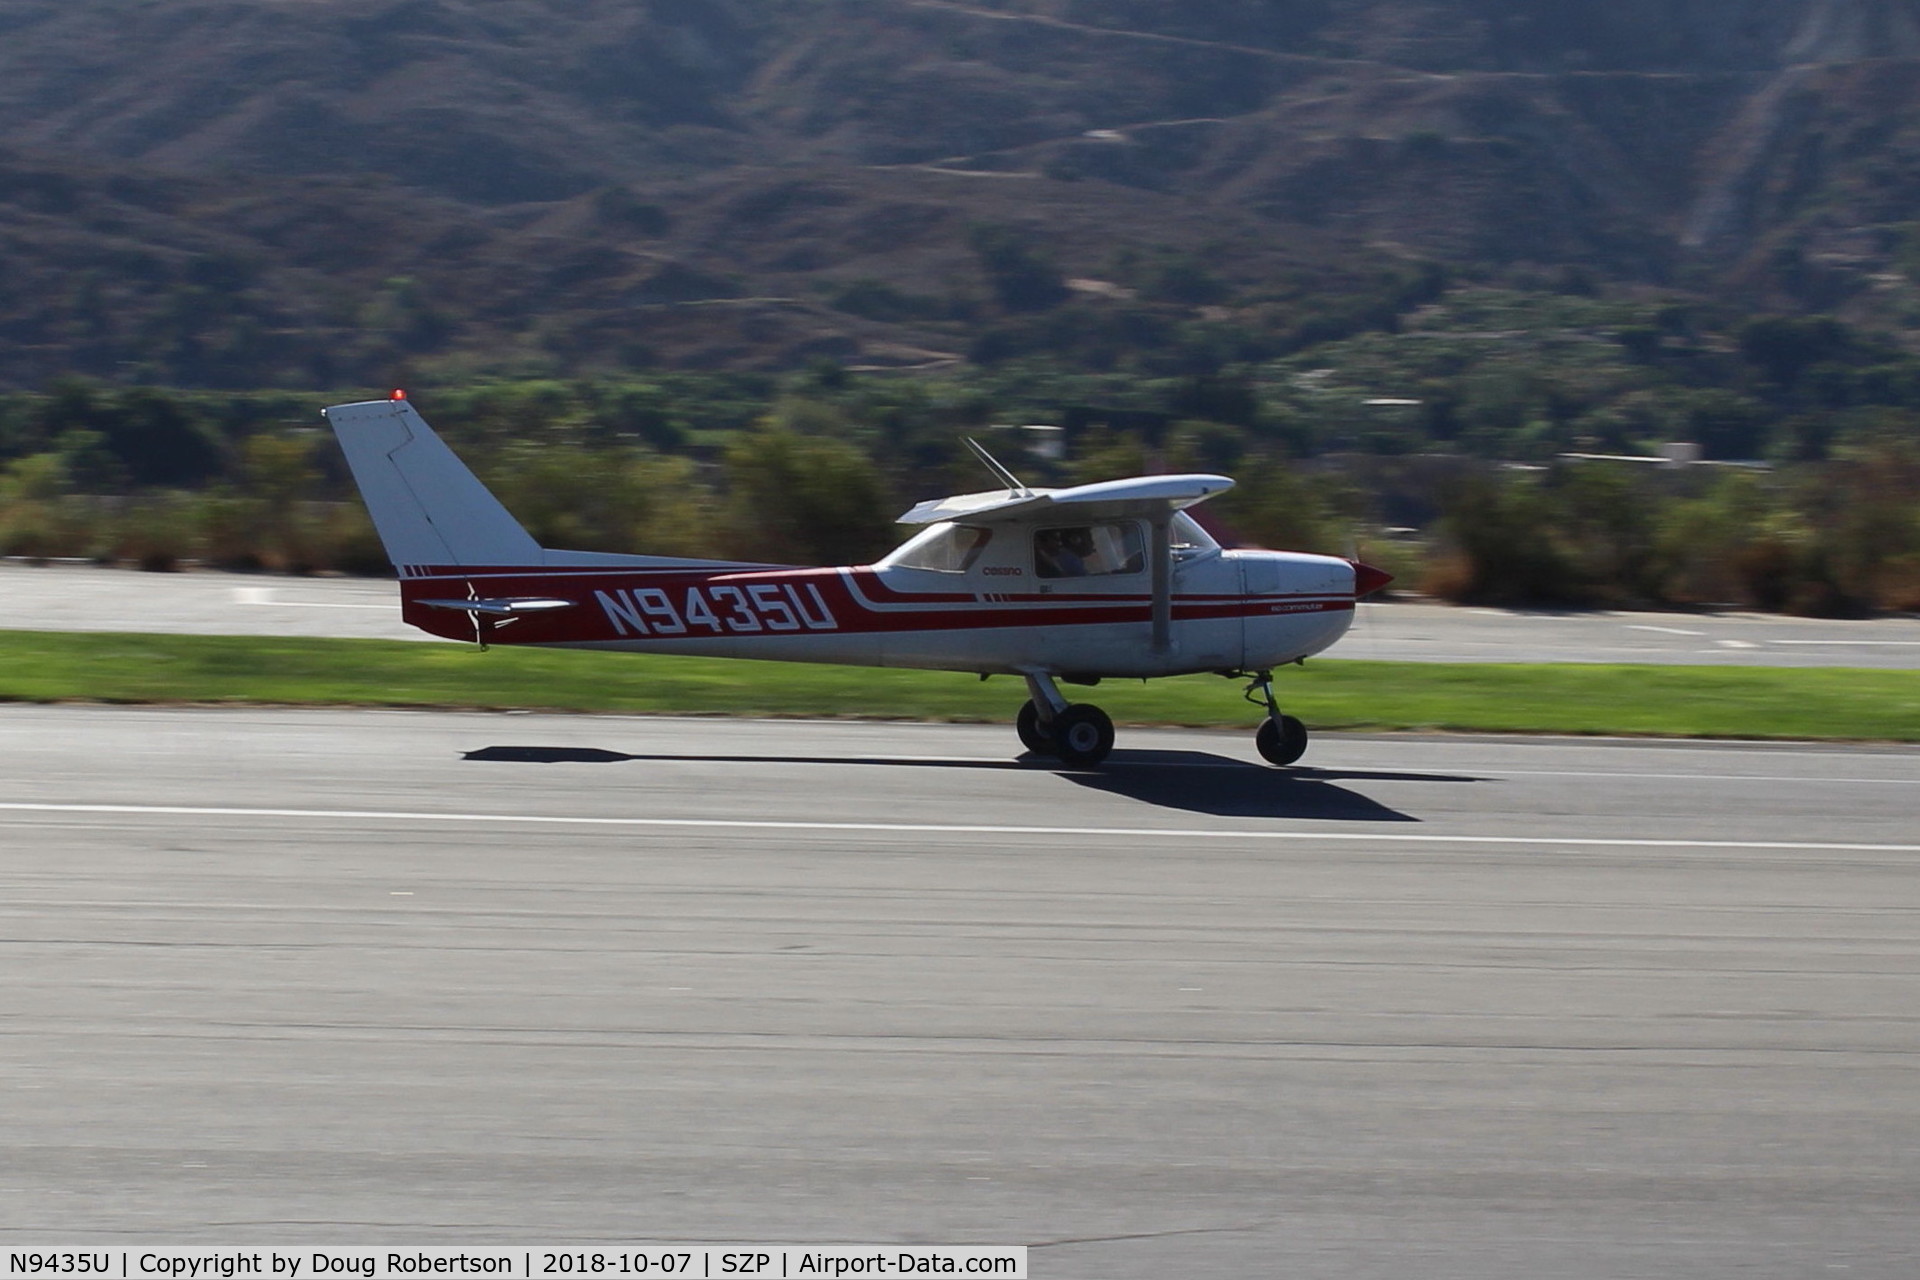 N9435U, 1976 Cessna 150M C/N 15078383, 1976 Cessna 150M, Continental O-200 100 Hp, takeoff roll Rwy 22